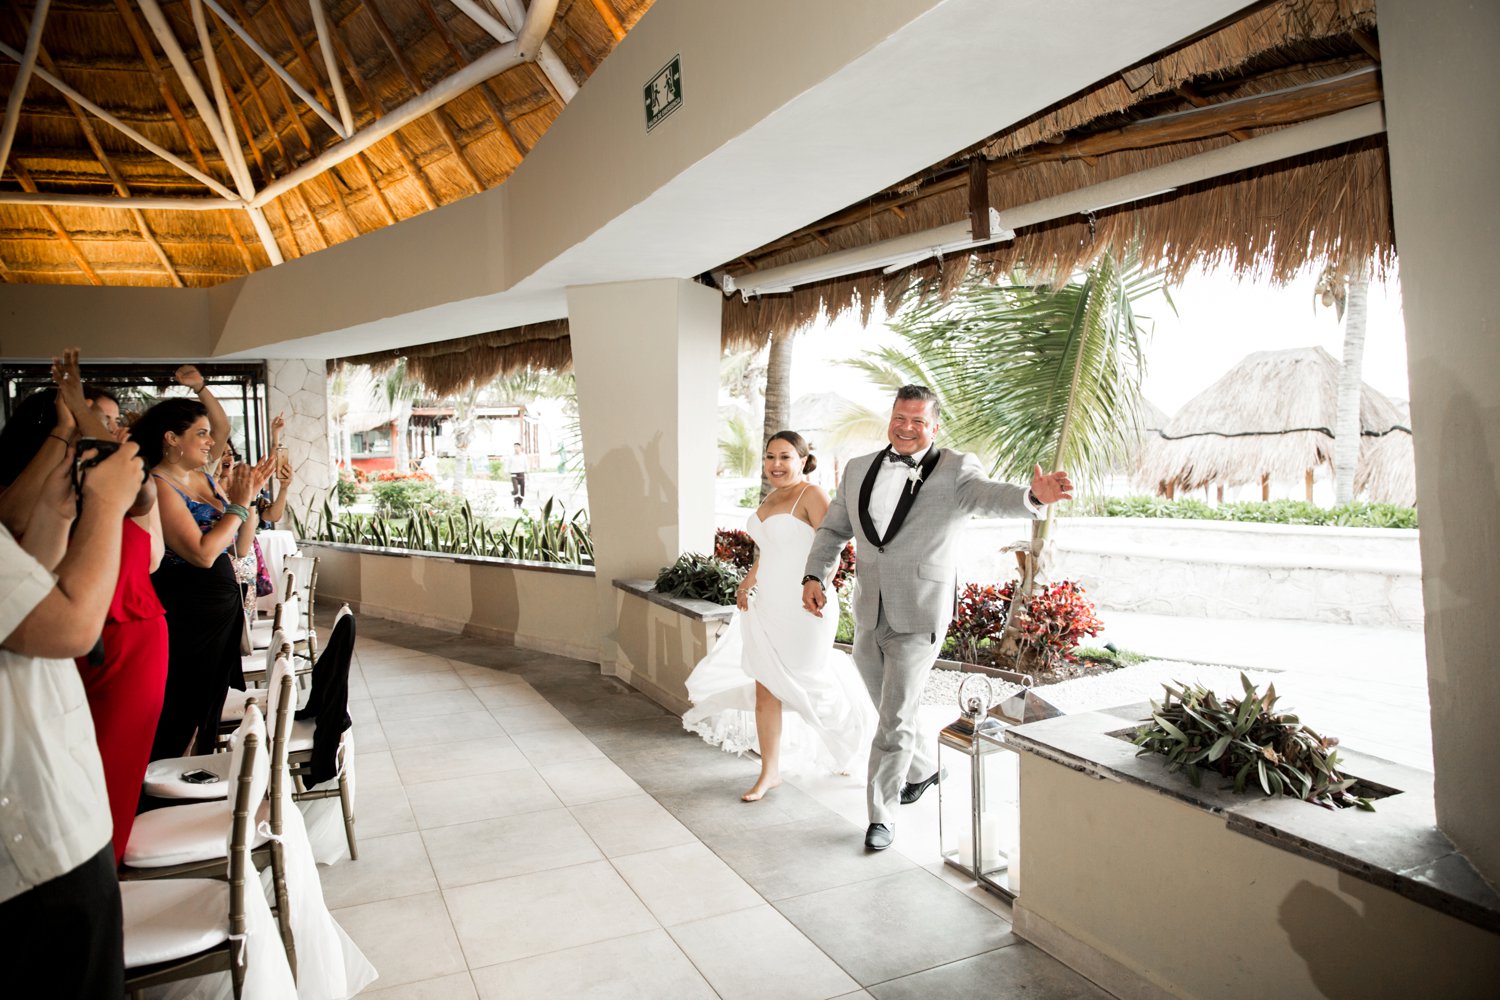  images by feliciathephotographer.com | destination wedding photographer | mexico | tropical | fiji | venue | azul beach resort | riviera maya | reception | first entrance | bride and groom | barefooted | 